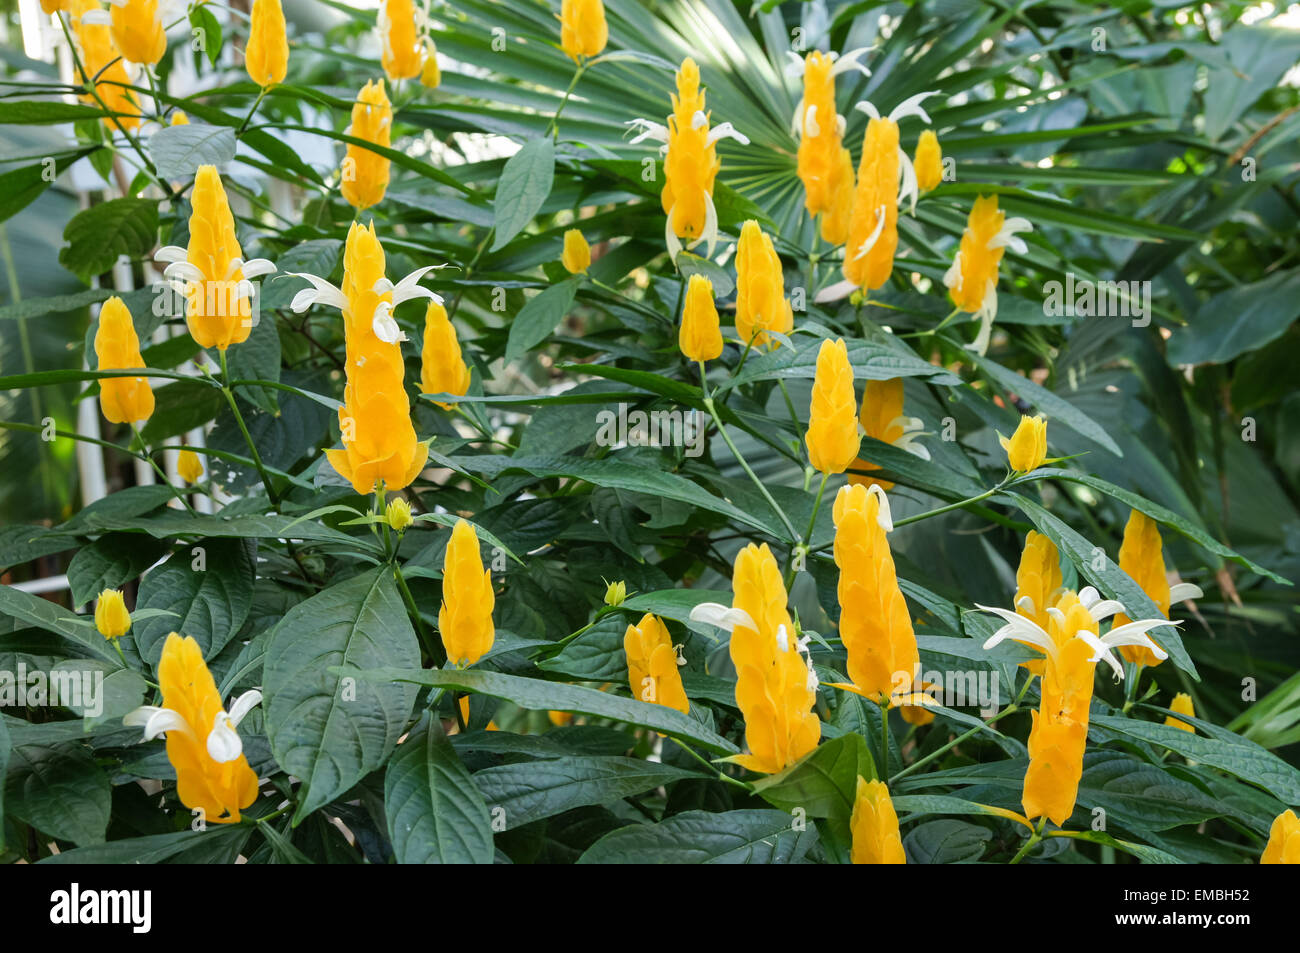 Fiori gialli di gamberi d'oro o di piante di lecca Foto Stock